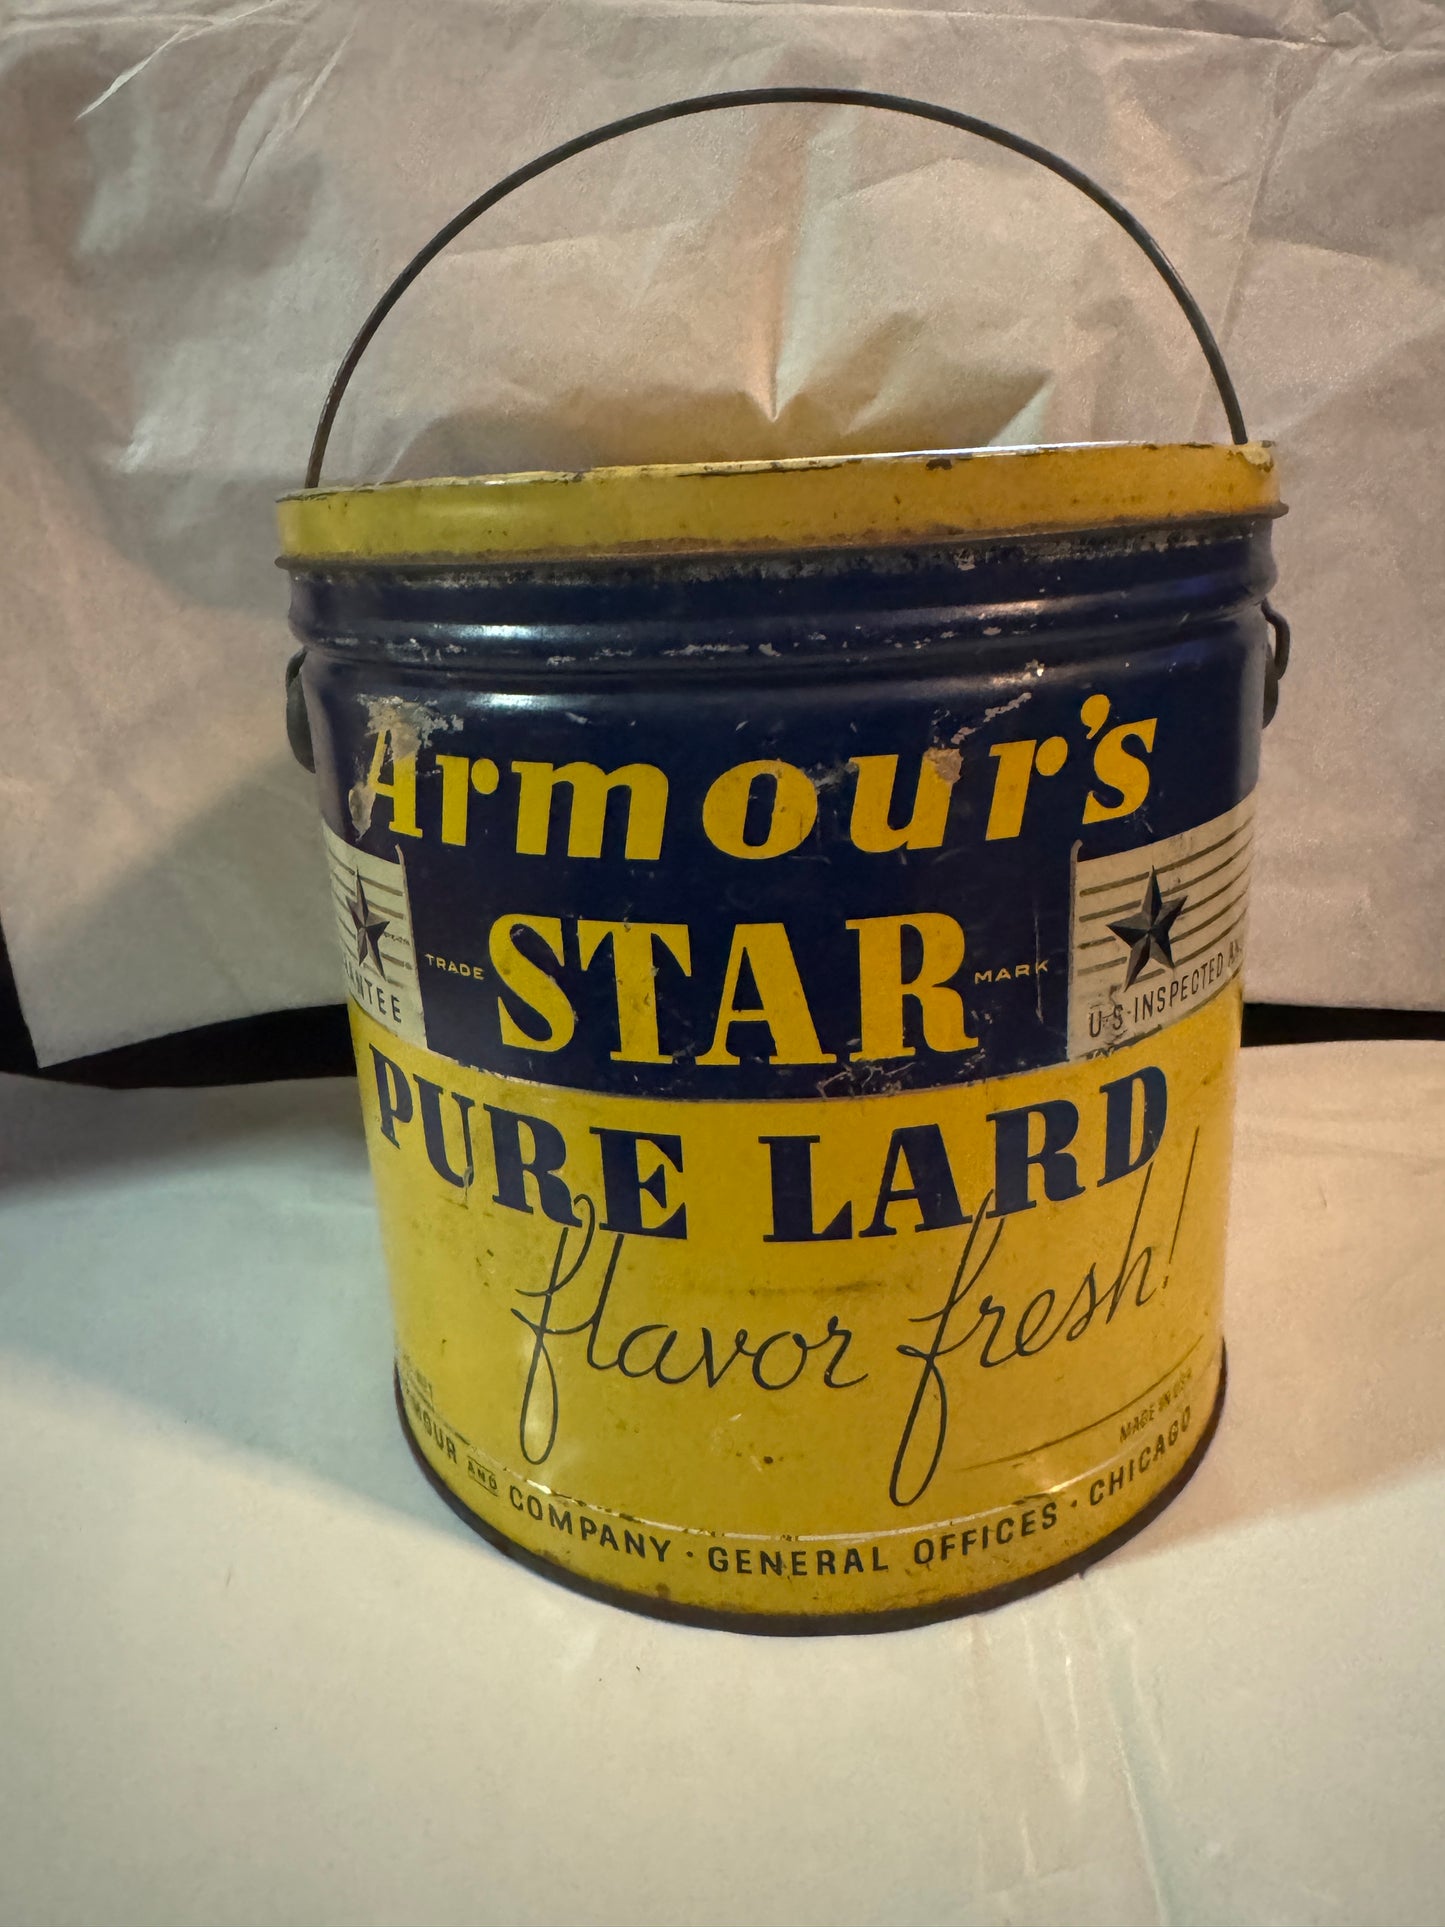 Armour's Star Pure Lard  Flavor Fresh. Textured, 4 LB Tin Bucket w/Handle